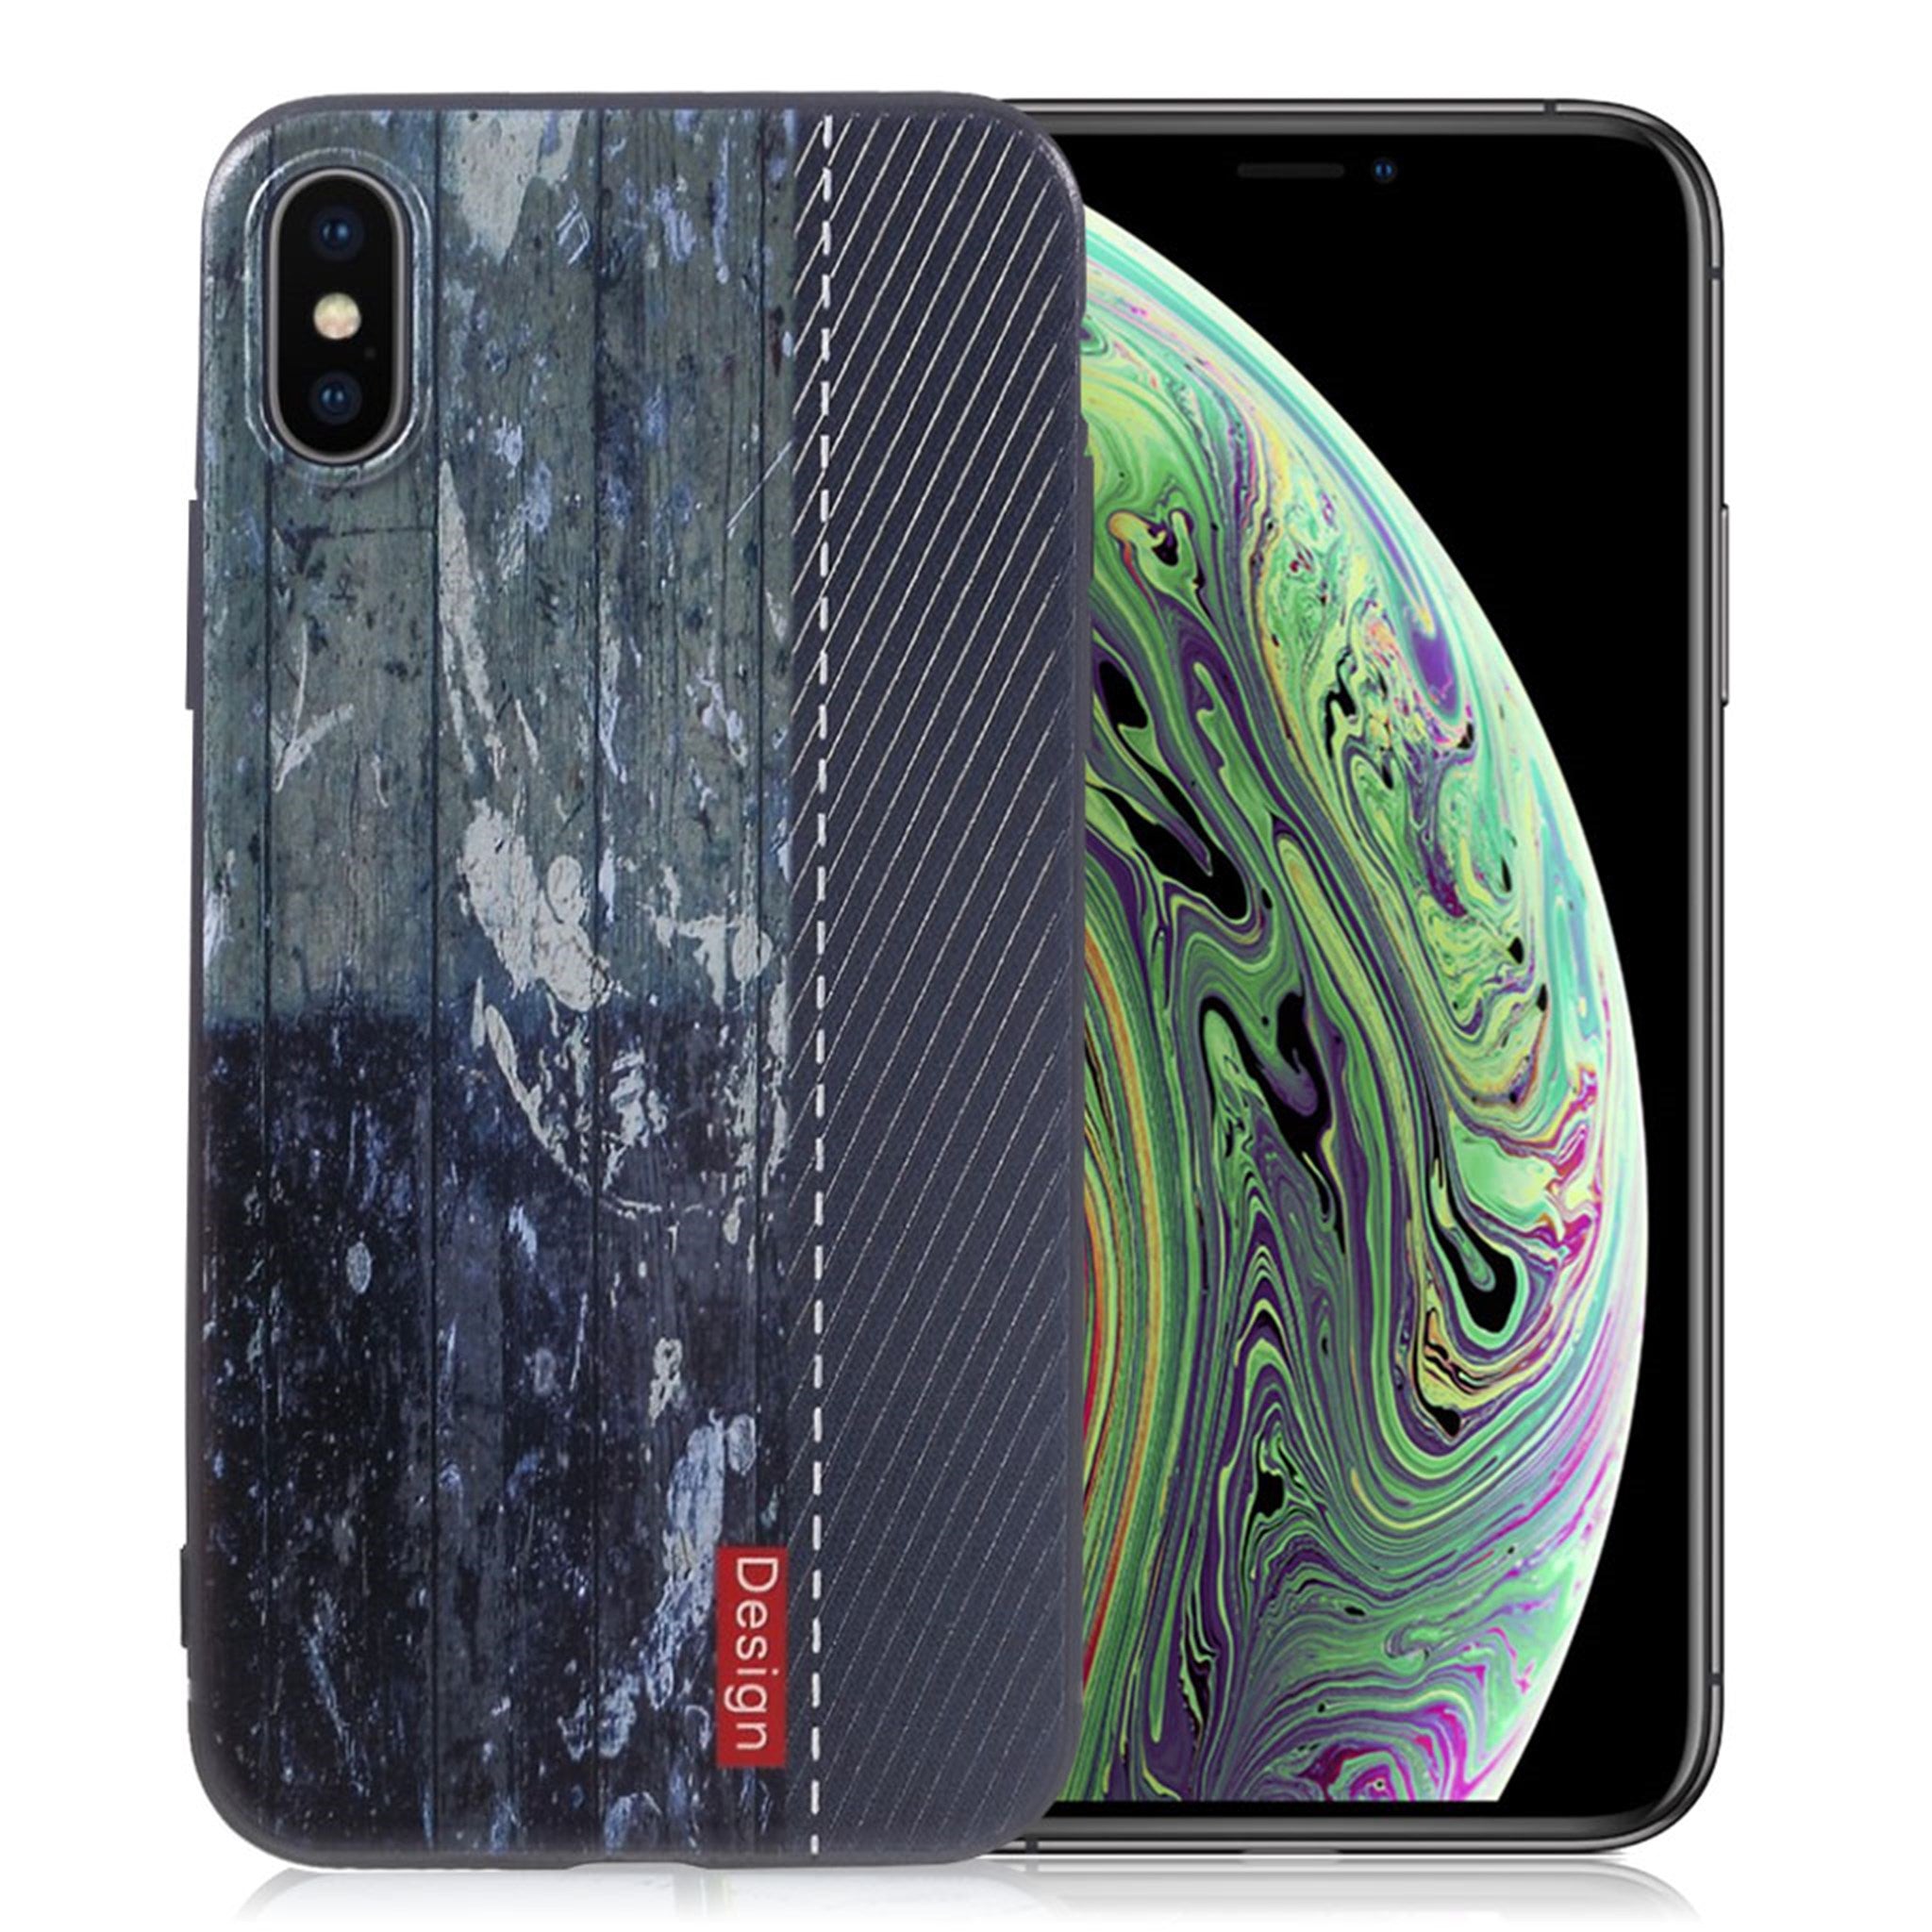 iPhone XS embossed pattern case - Dark Blue Wood Texture